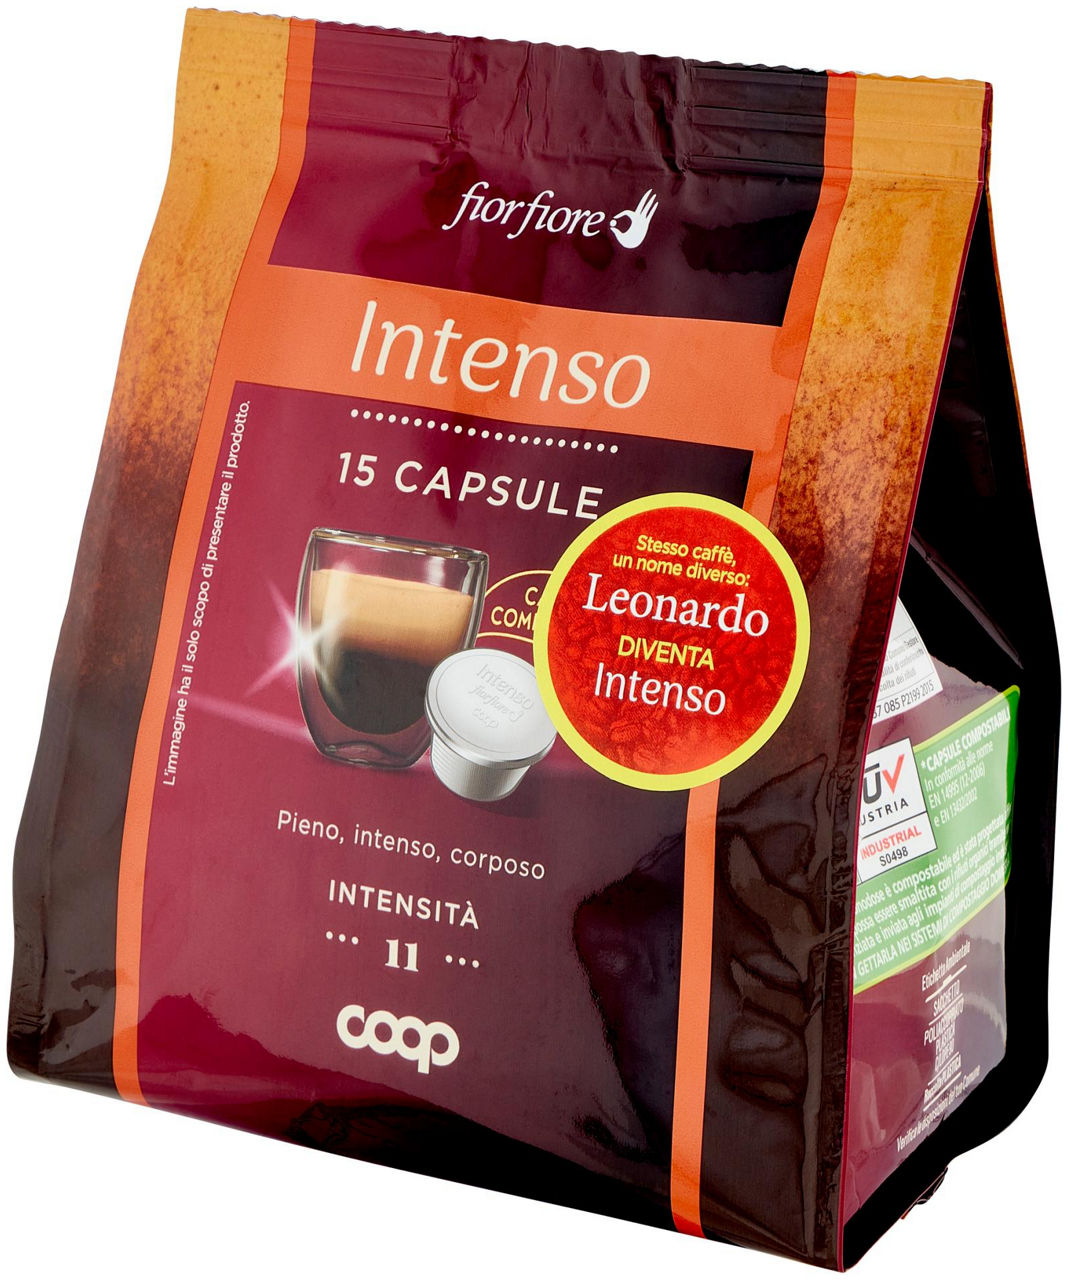 CAFFE' INTENSO IN CAPSULE COMPOSTABILI "LEONARDO" FIOR FIORE COOP PZ 15 G 95 - 6